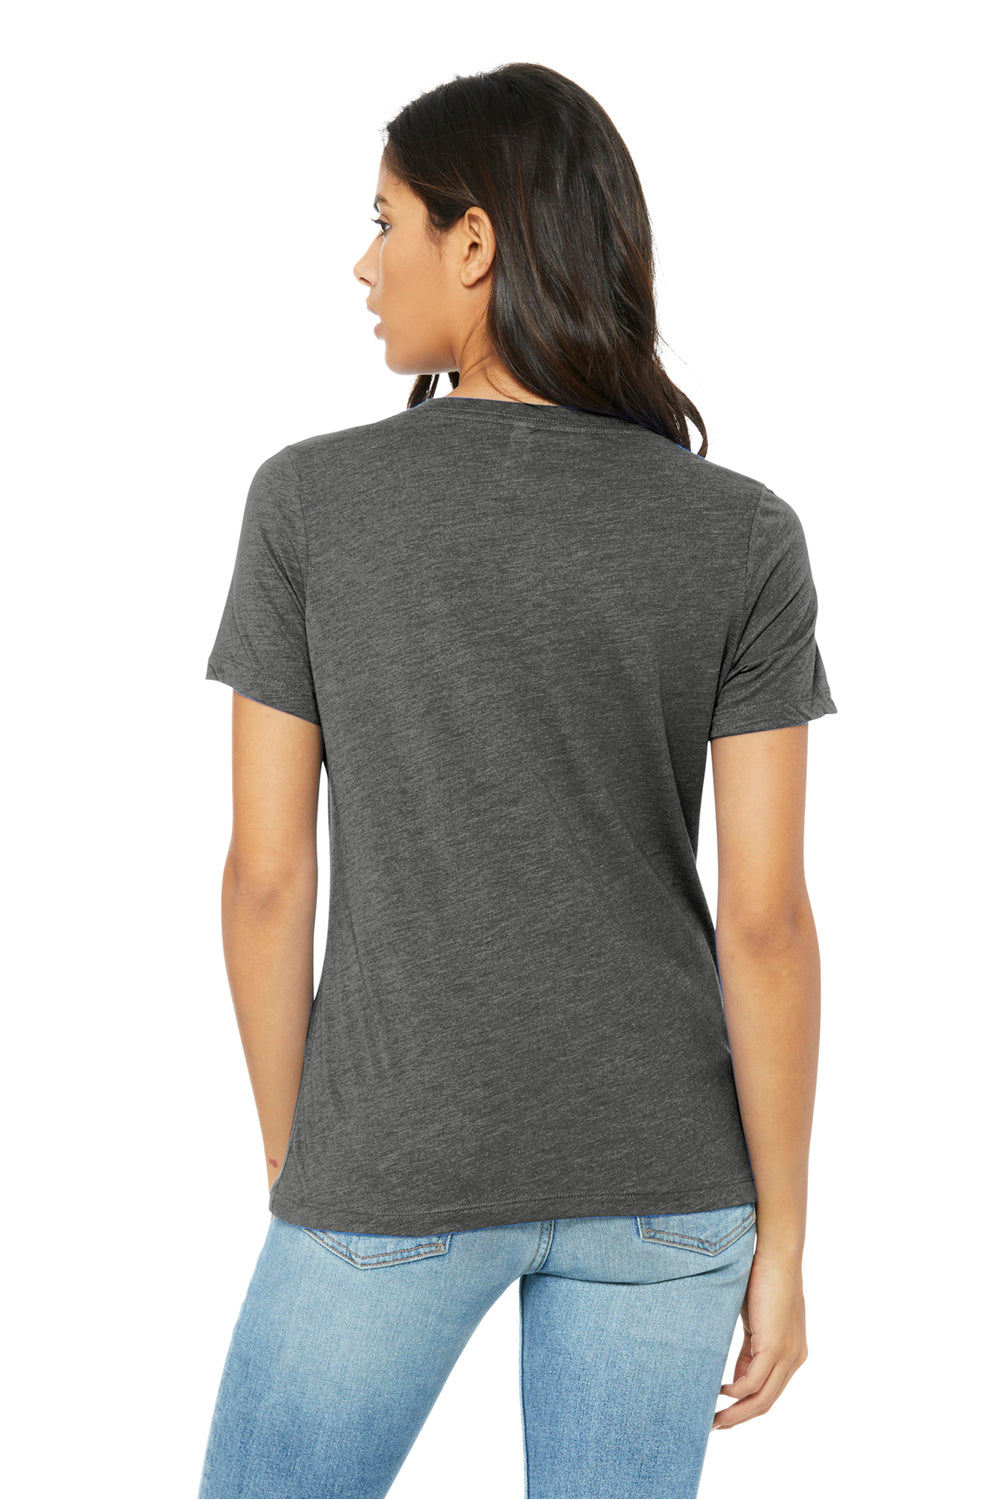 Bella + Canvas BC6415 Womens Short Sleeve V-Neck T-Shirt Grey Model Back